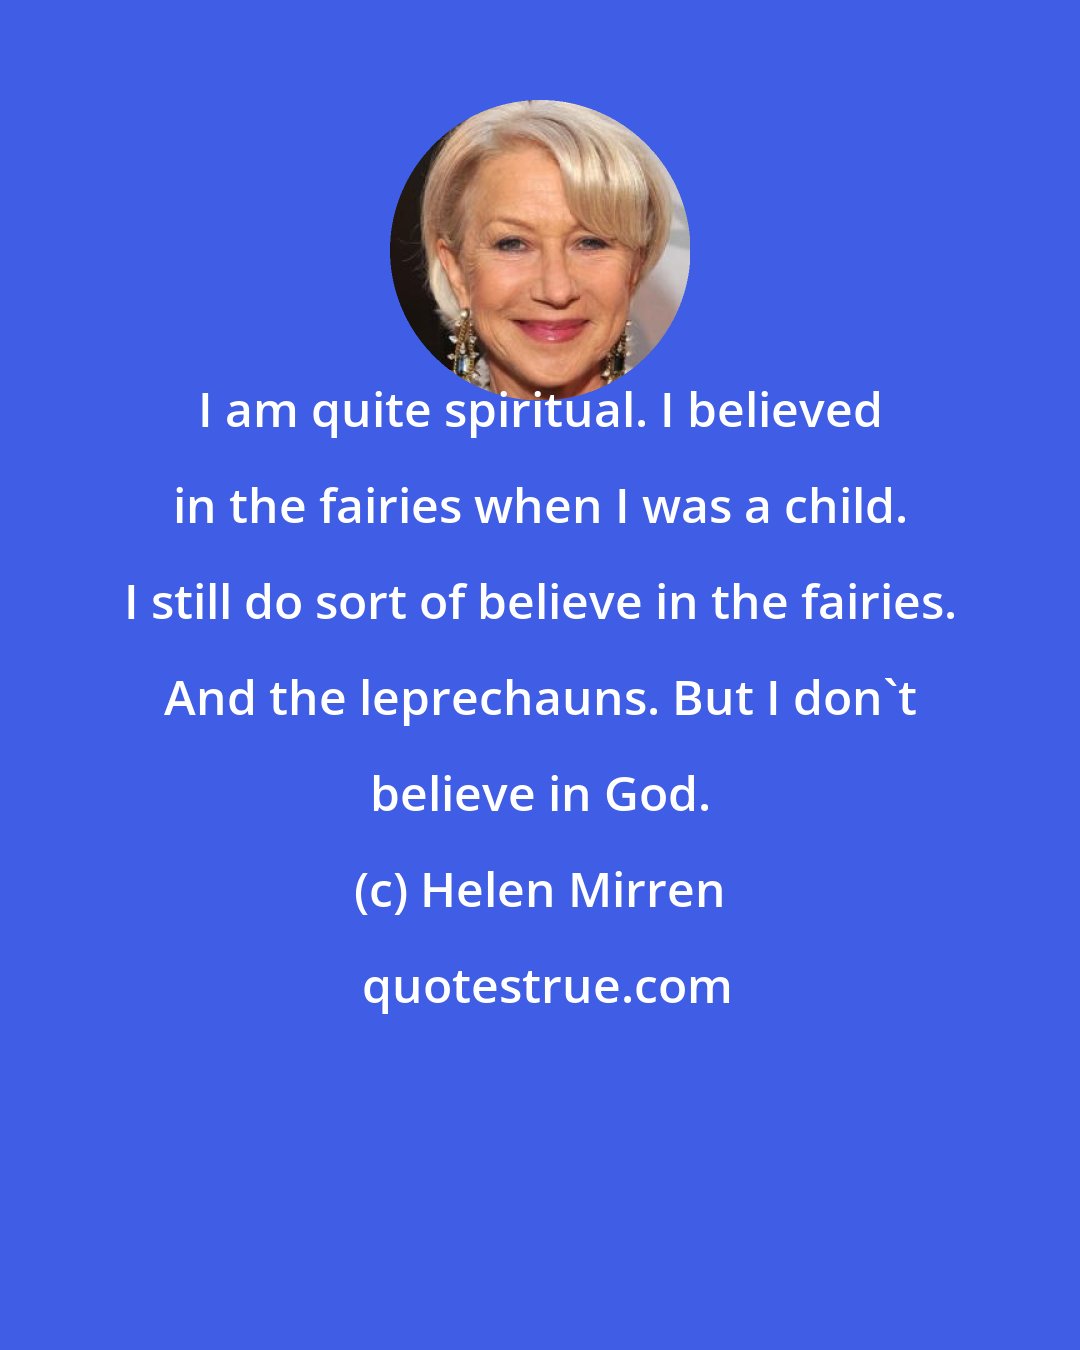 Helen Mirren: I am quite spiritual. I believed in the fairies when I was a child. I still do sort of believe in the fairies. And the leprechauns. But I don't believe in God.